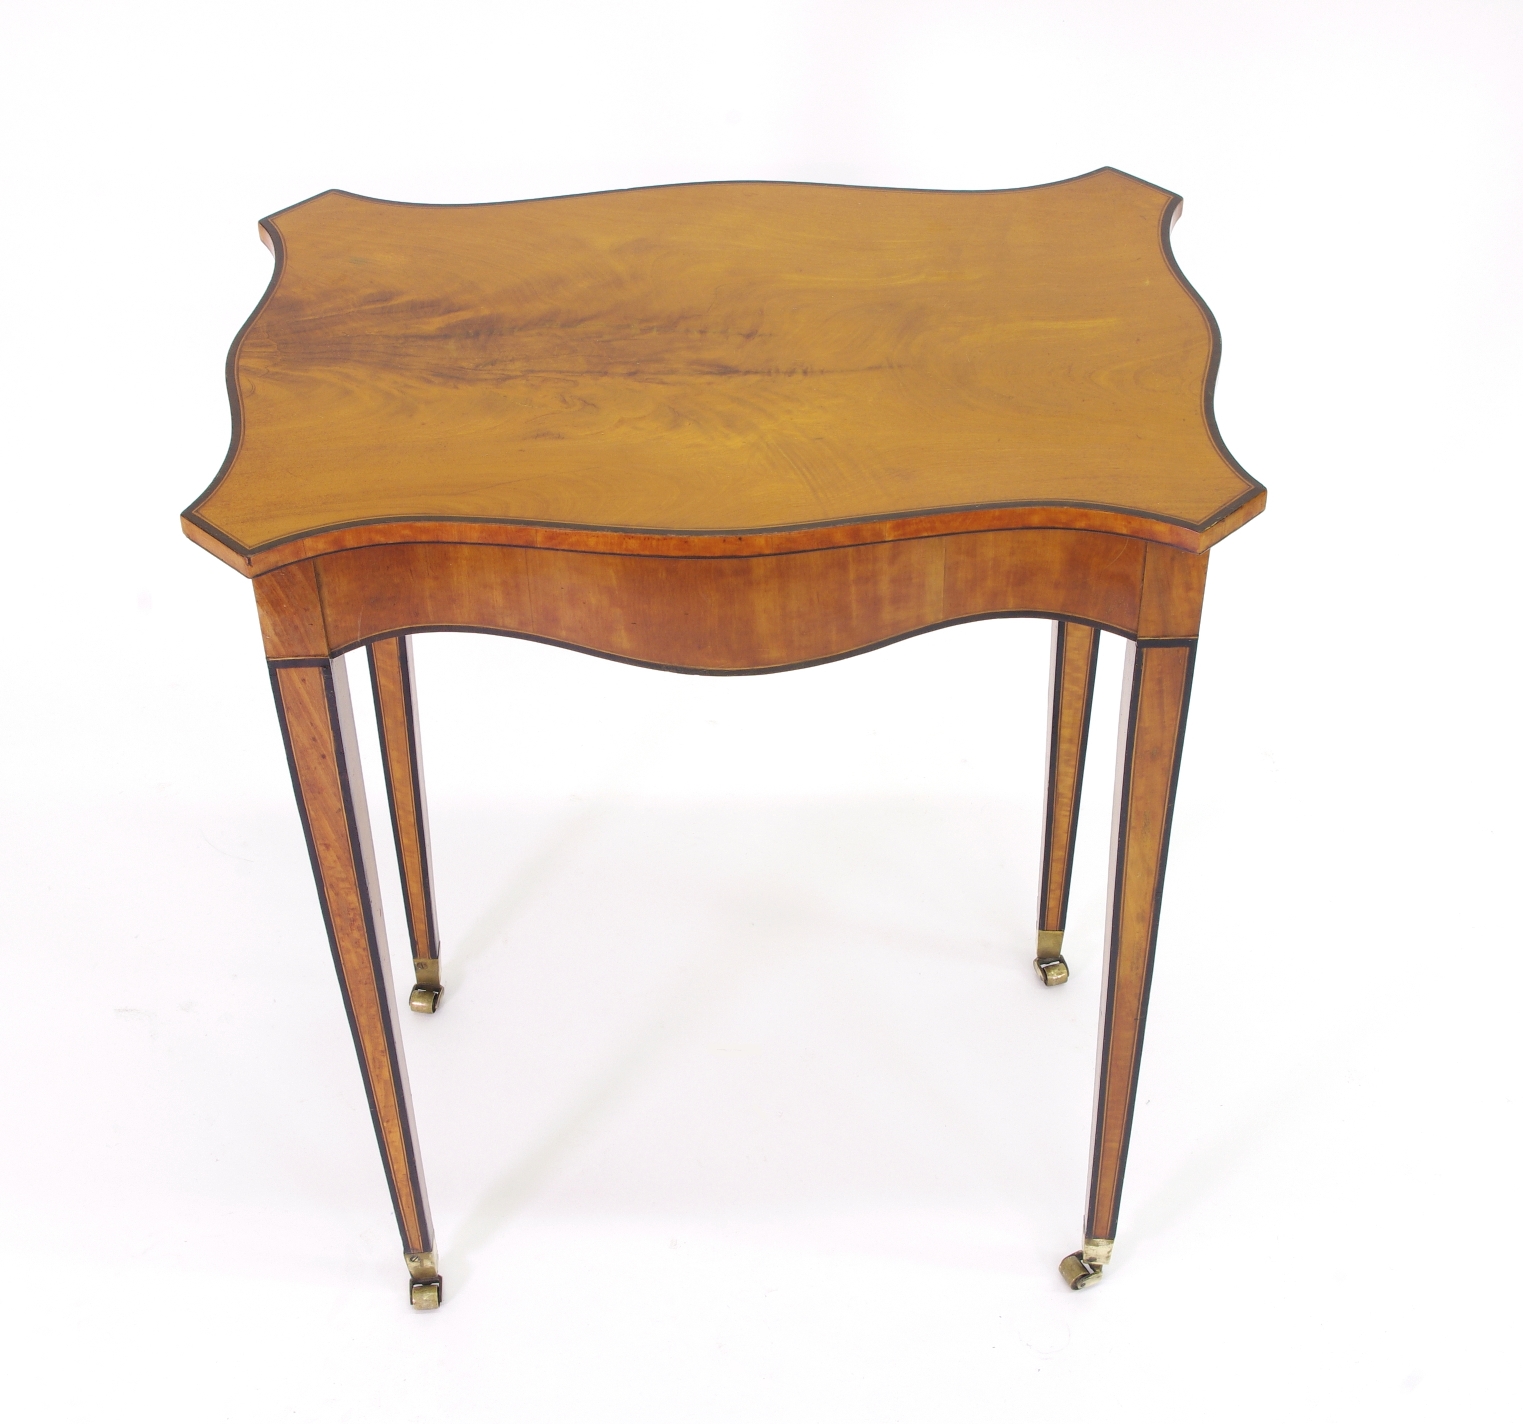 George III Satinwood Side Table, c. 1790